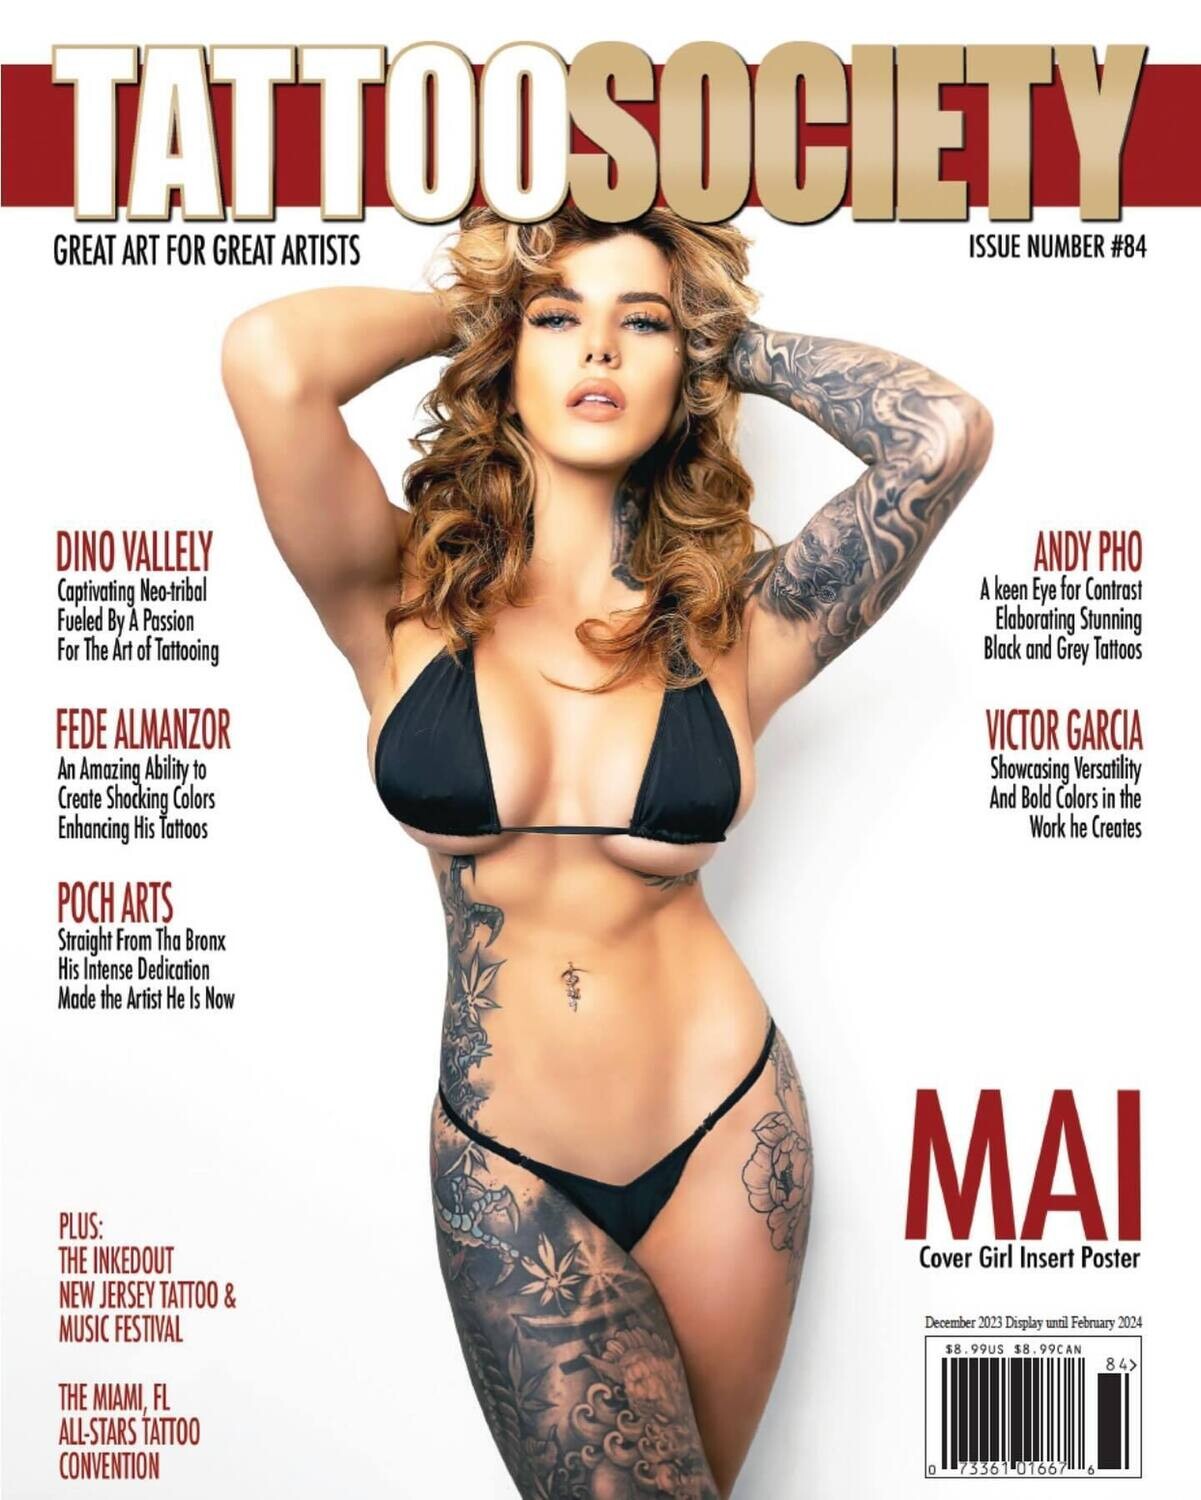 Tattoo Society Magazine Issue 84 - Covergirl Mai